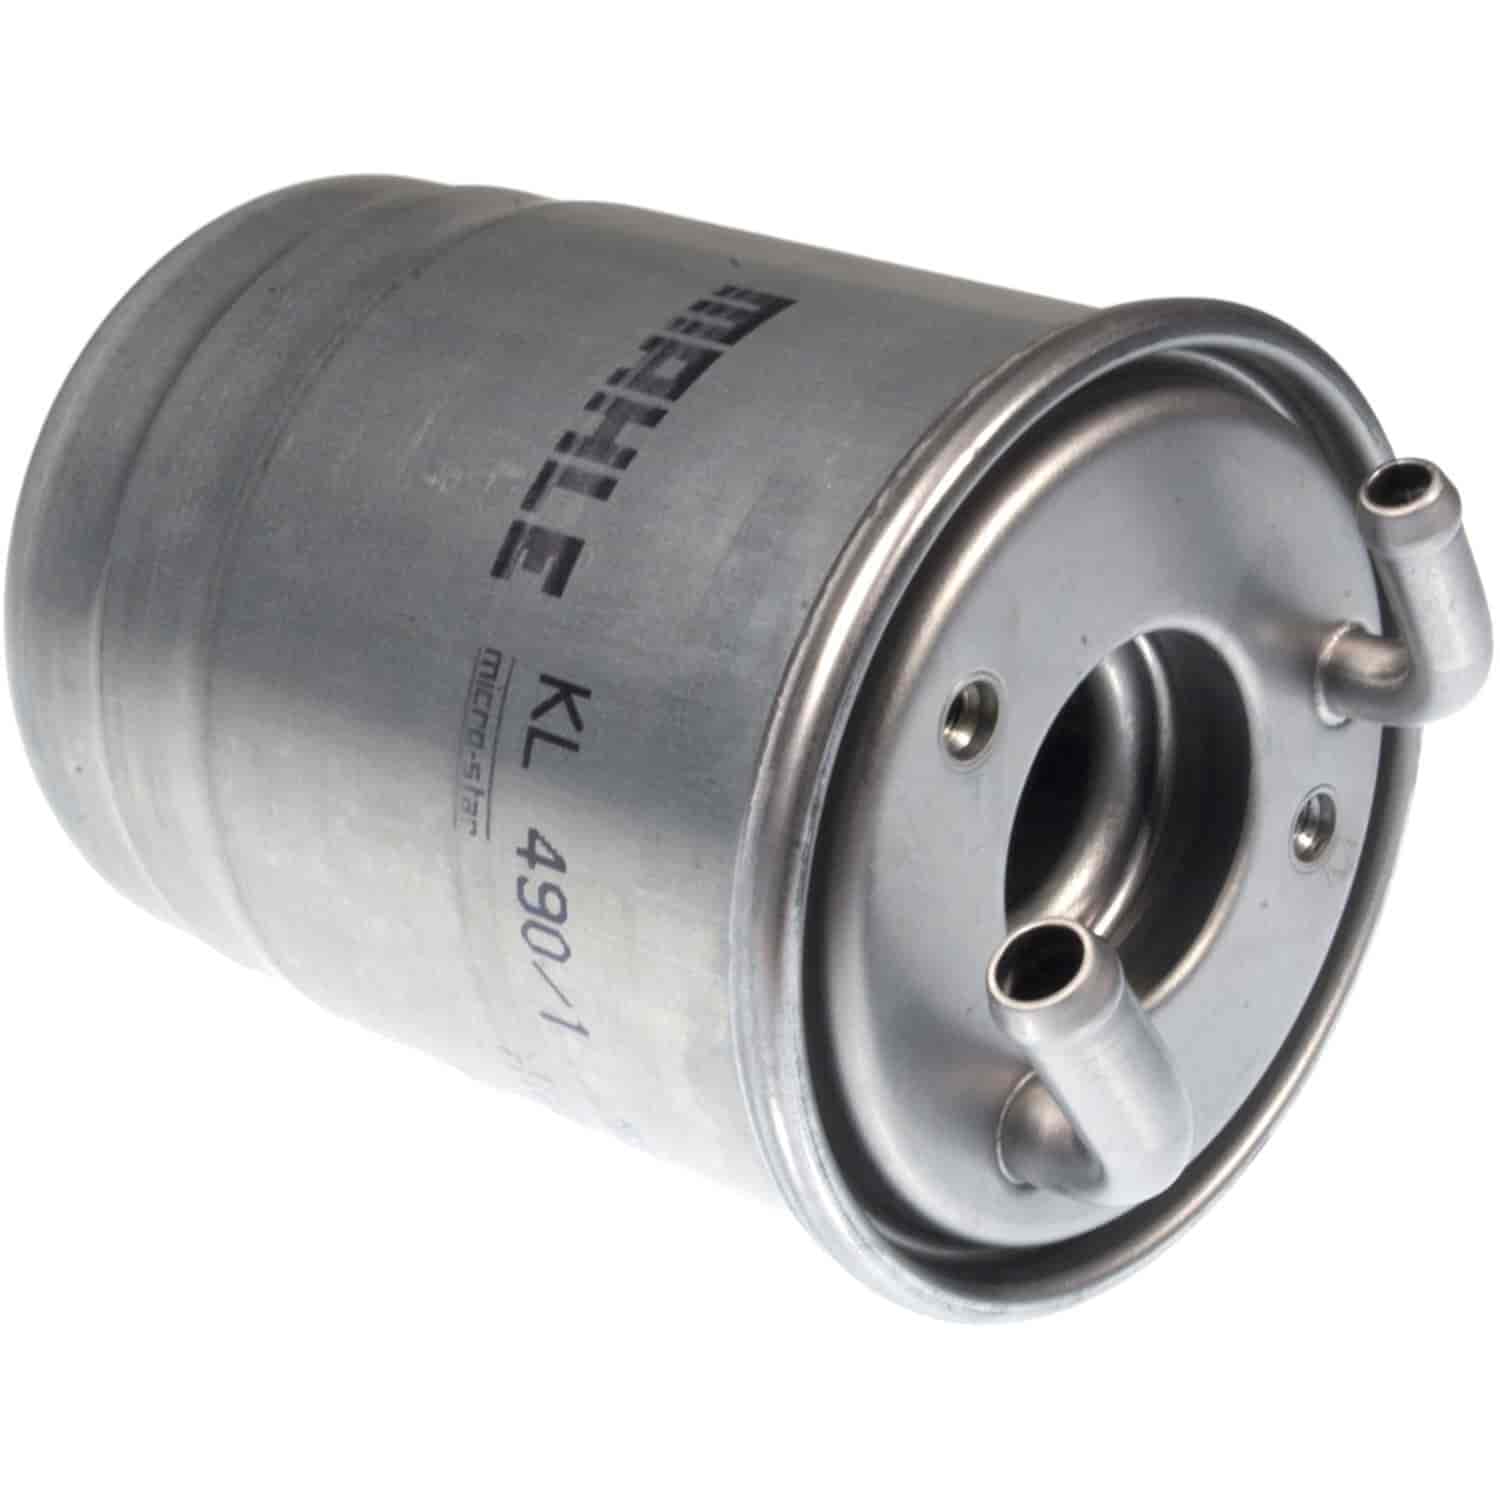 Mahle Fuel Filter Sprinter mit OM 651 4cyl.Diesel